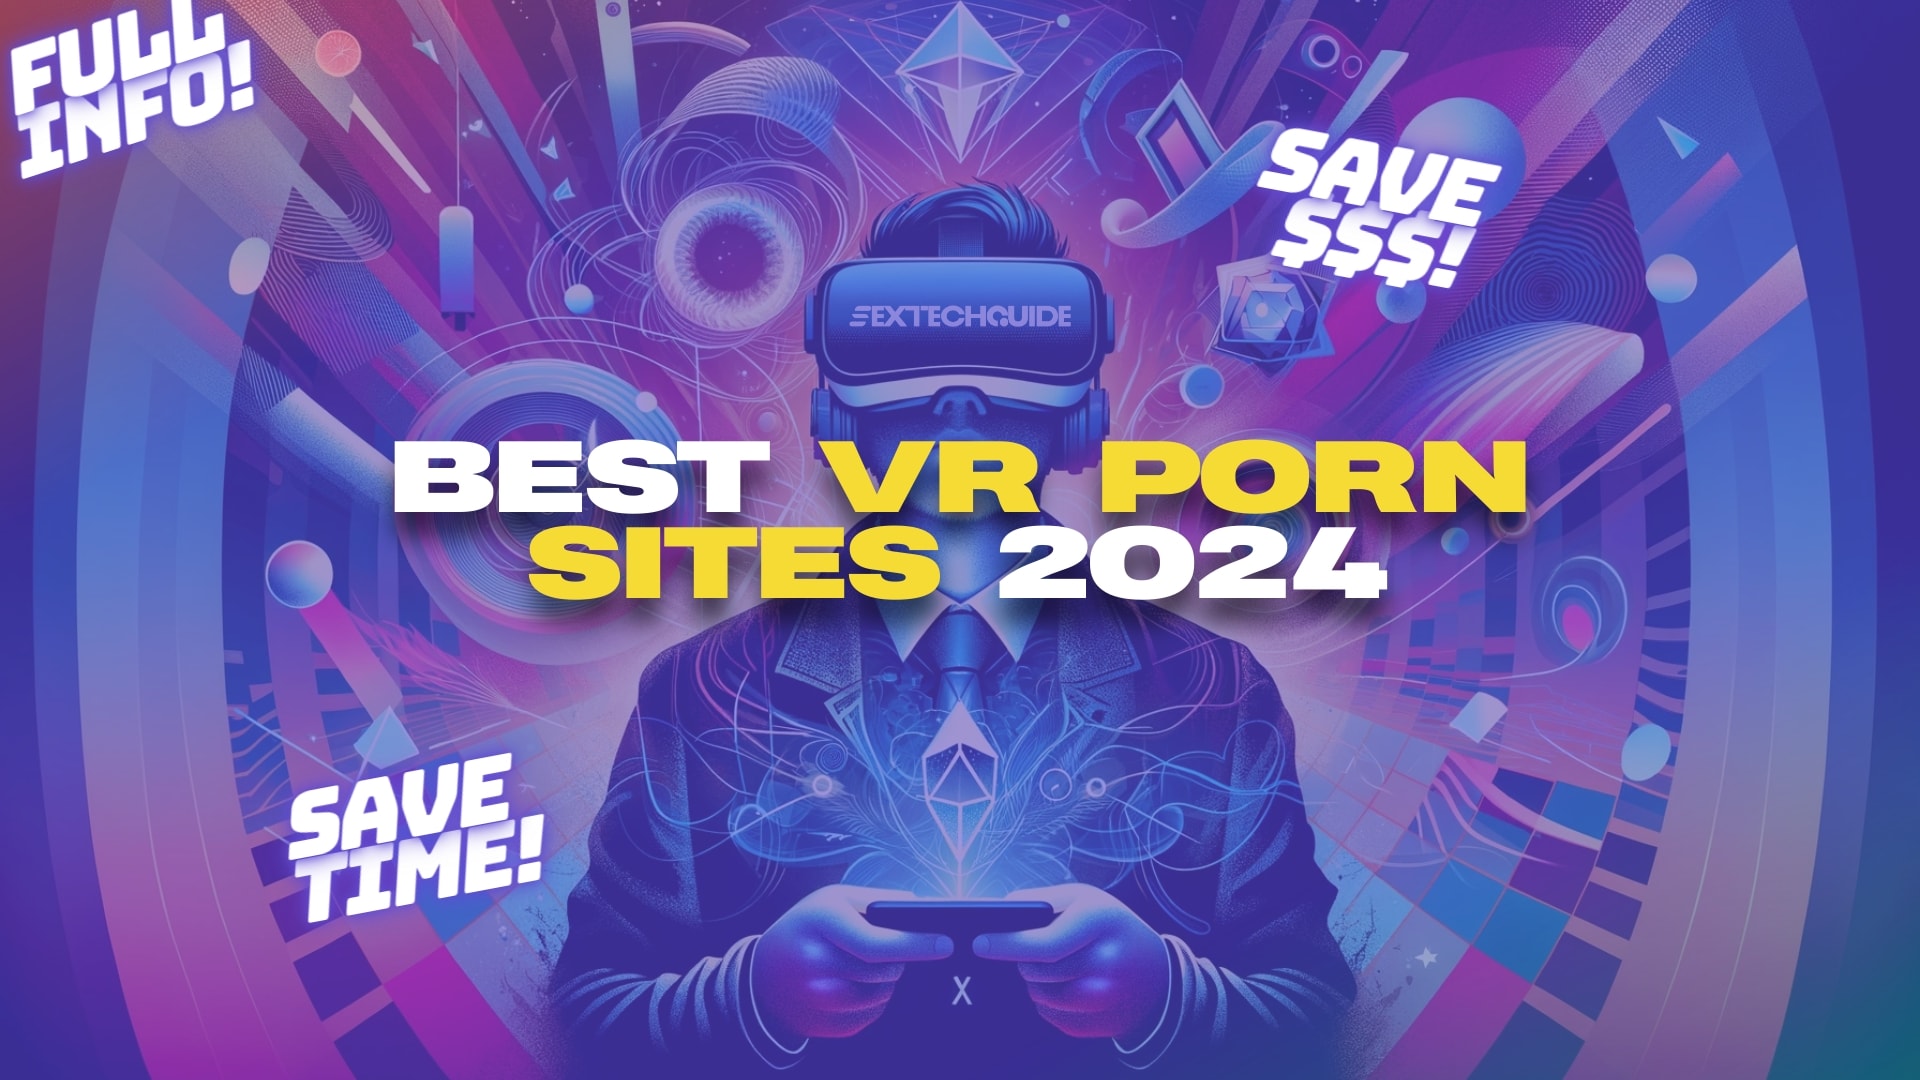 Best VR Porn Sites 2024: Top 20 Free & Premium Options